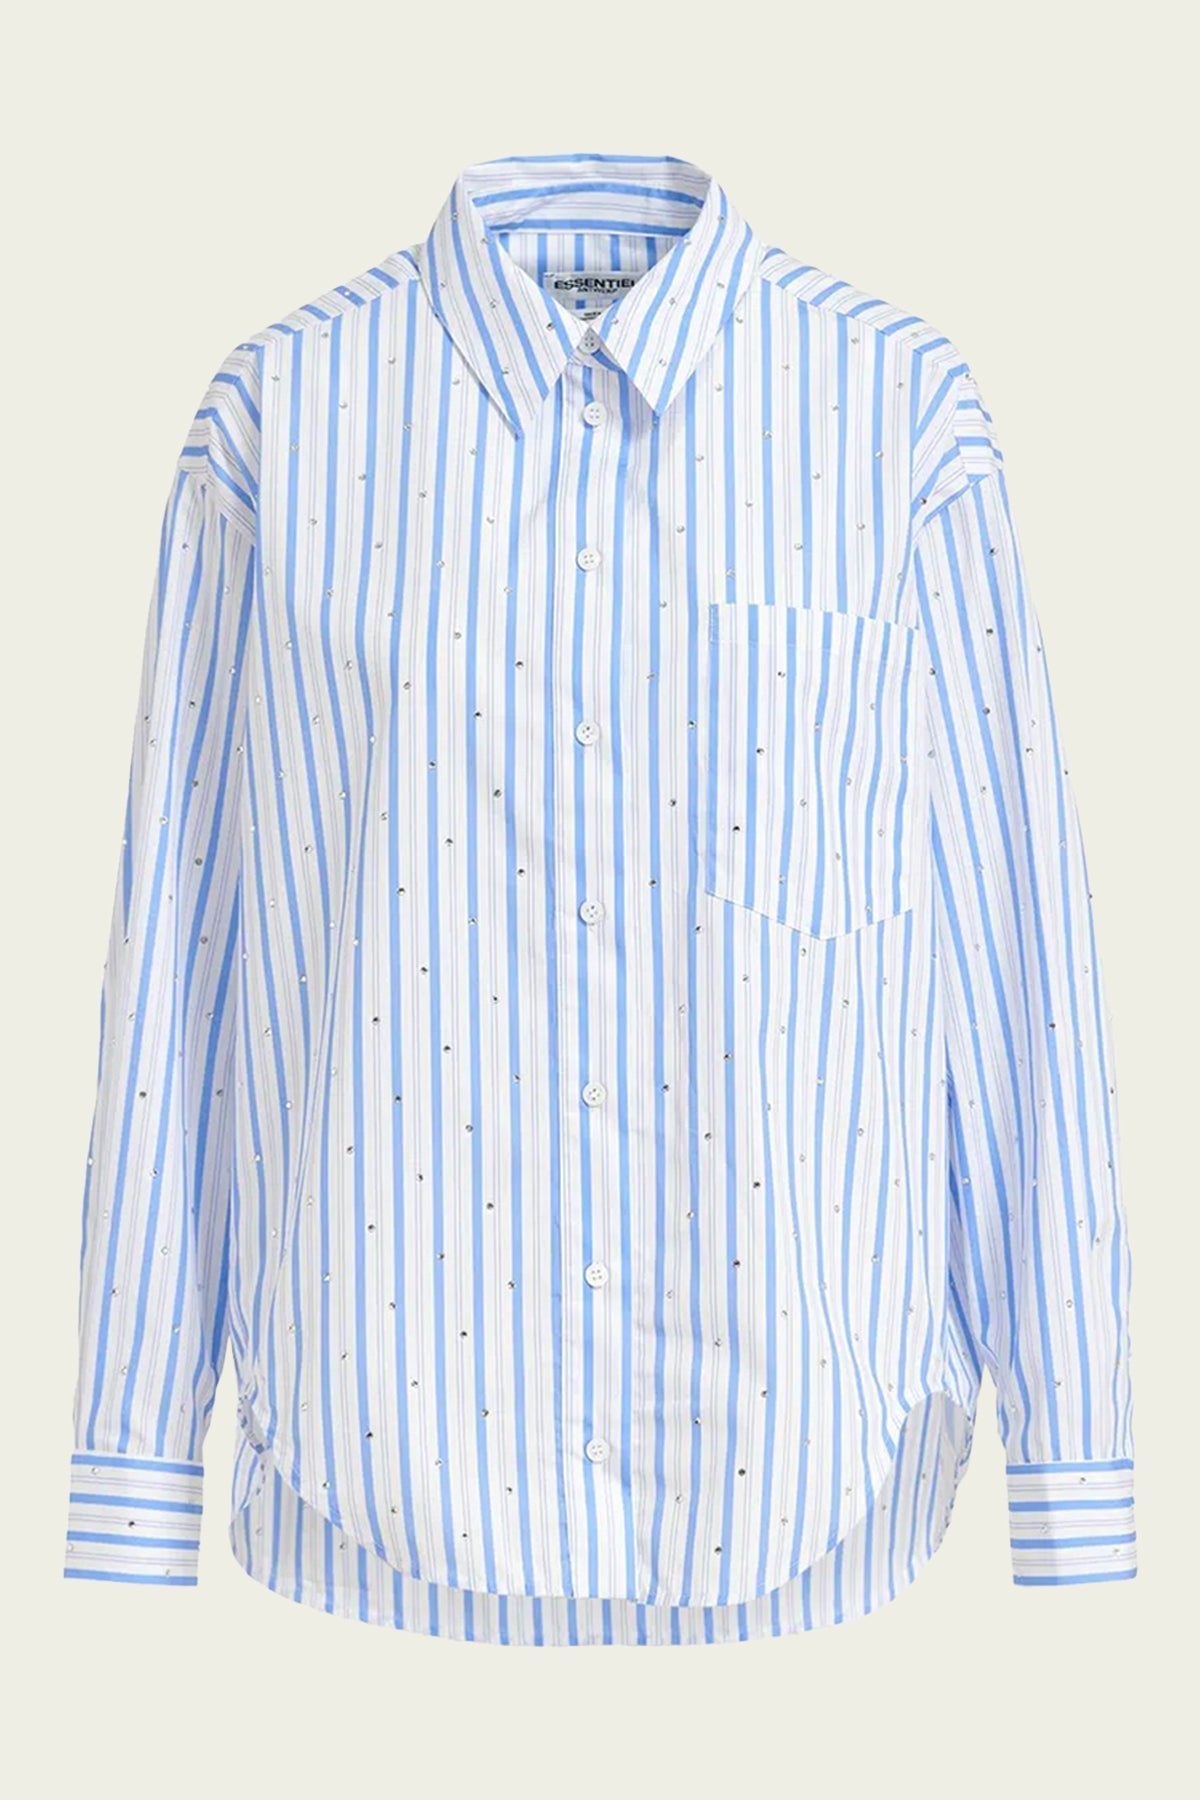 Fevertree Cotton Embellished Shirt in White Blue Striped - shop - olivia.com